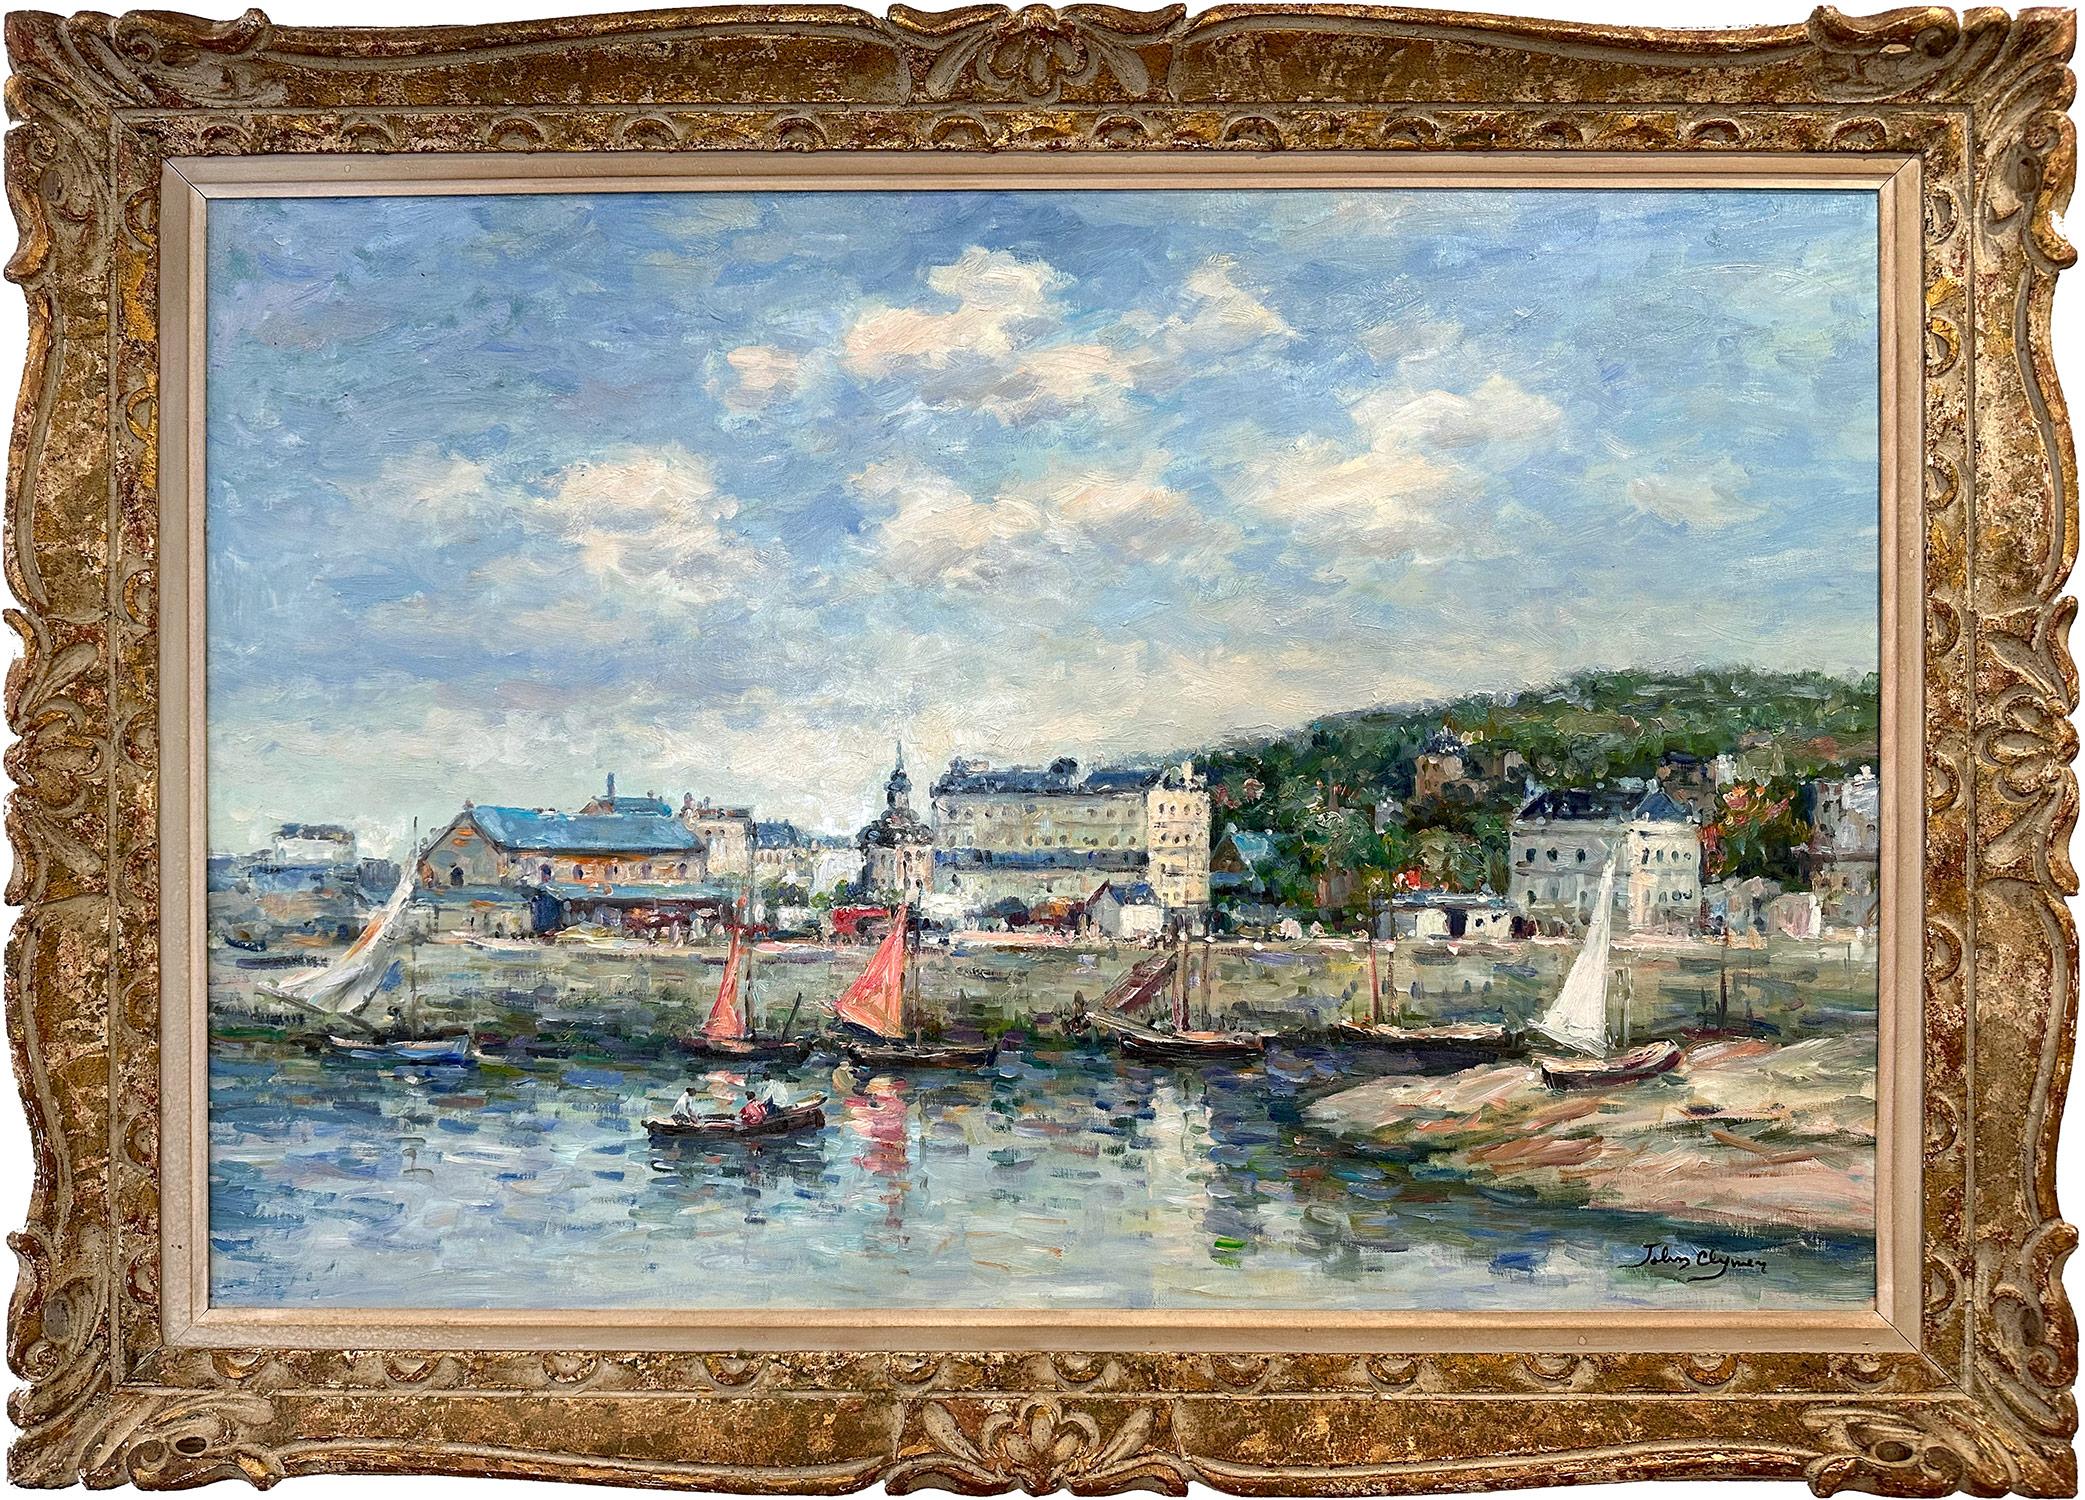 John Clymer Figurative Painting - "Le Port de Trouville-sur-Mer" British American Impressionist Seashore Painting